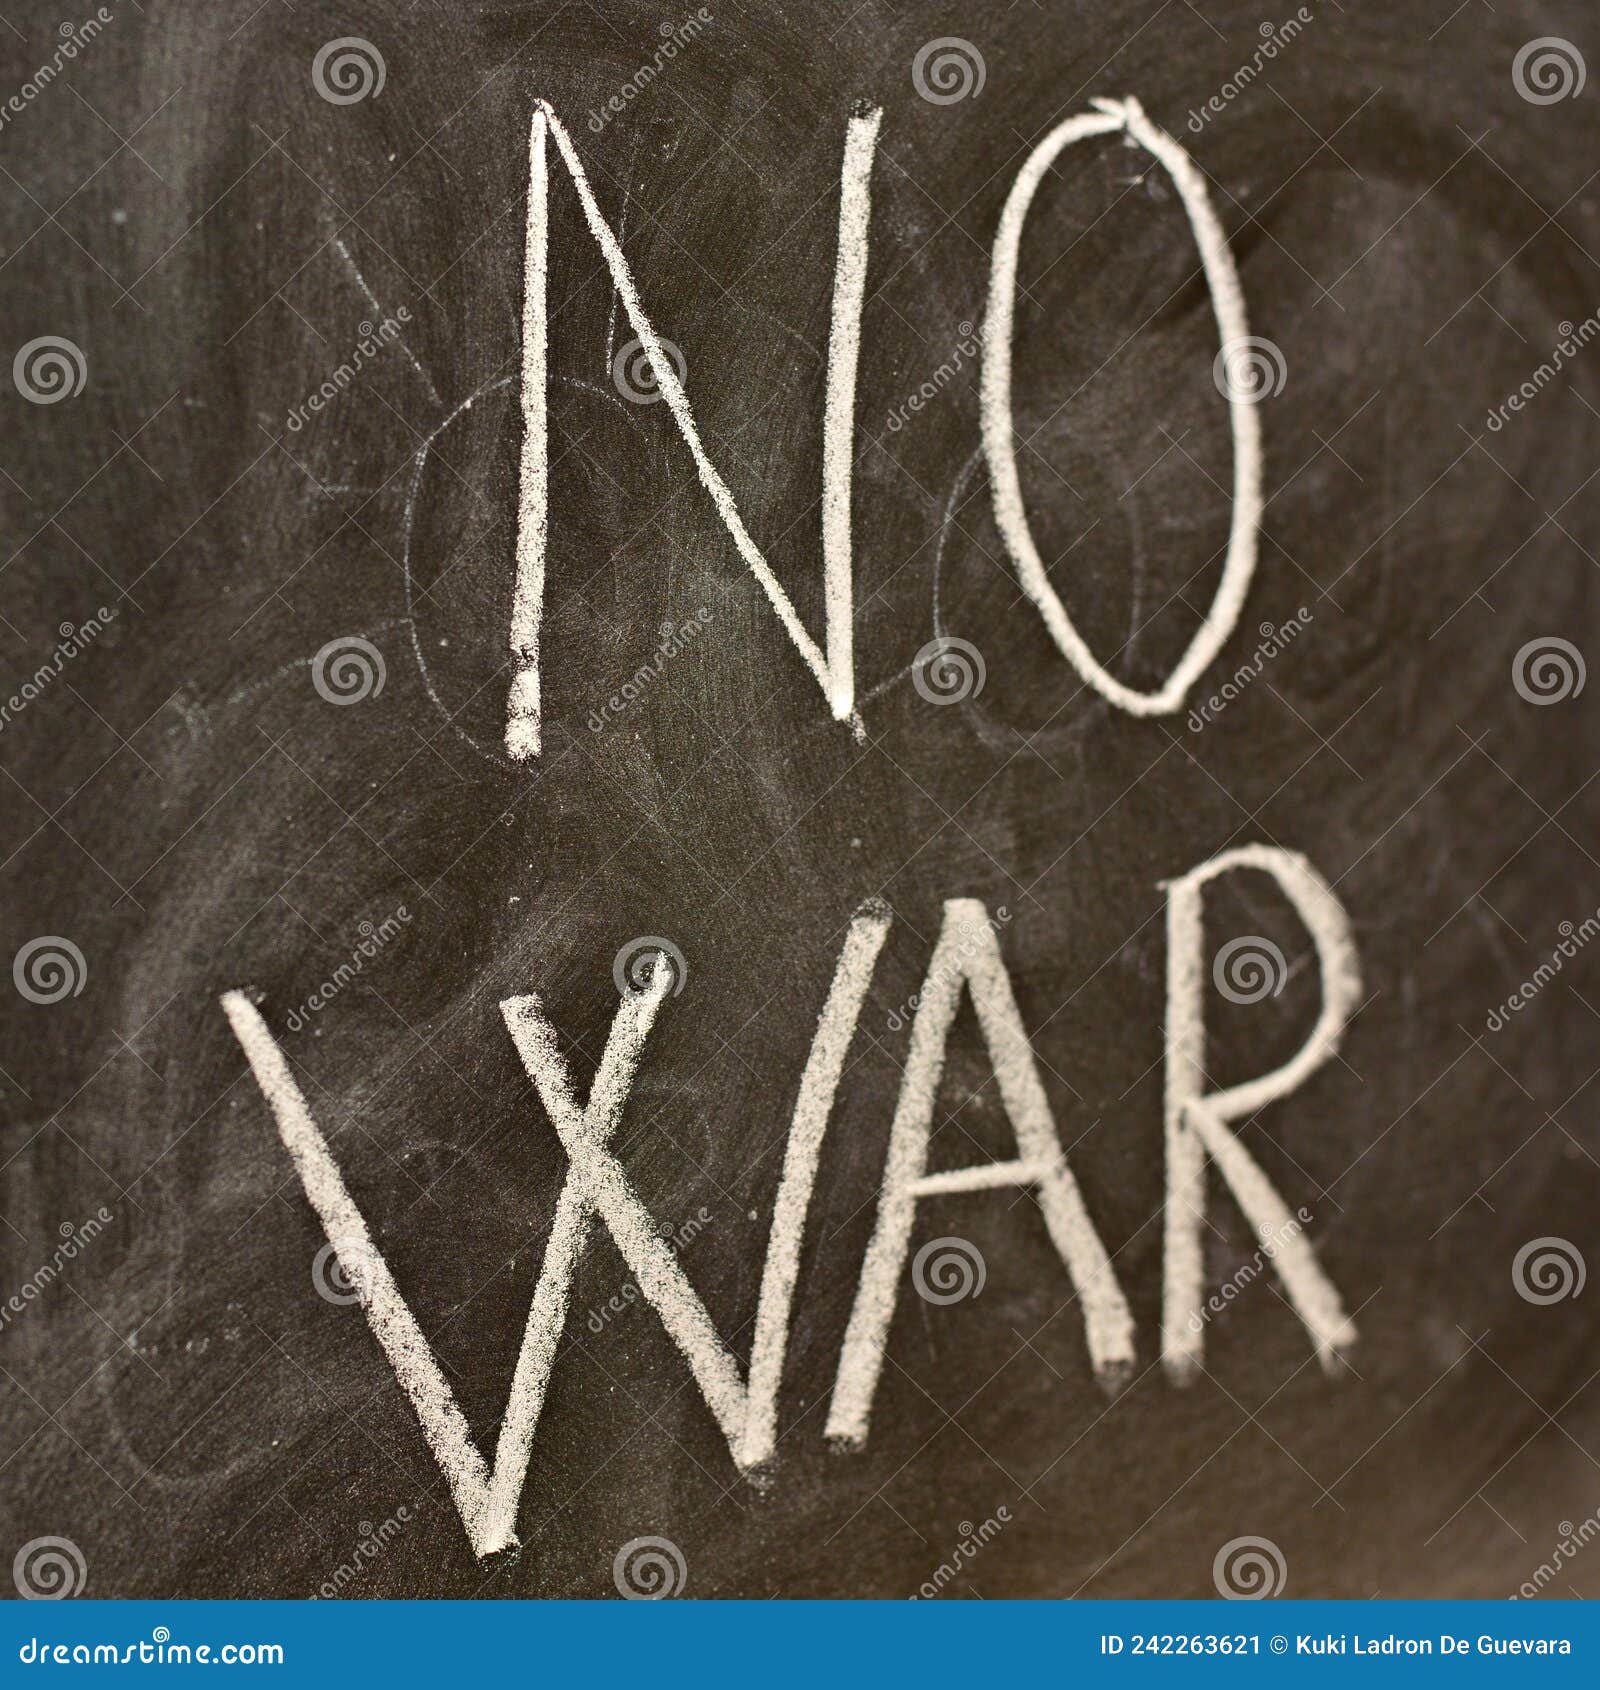 no war, handwritten with a chalk on the blackboard